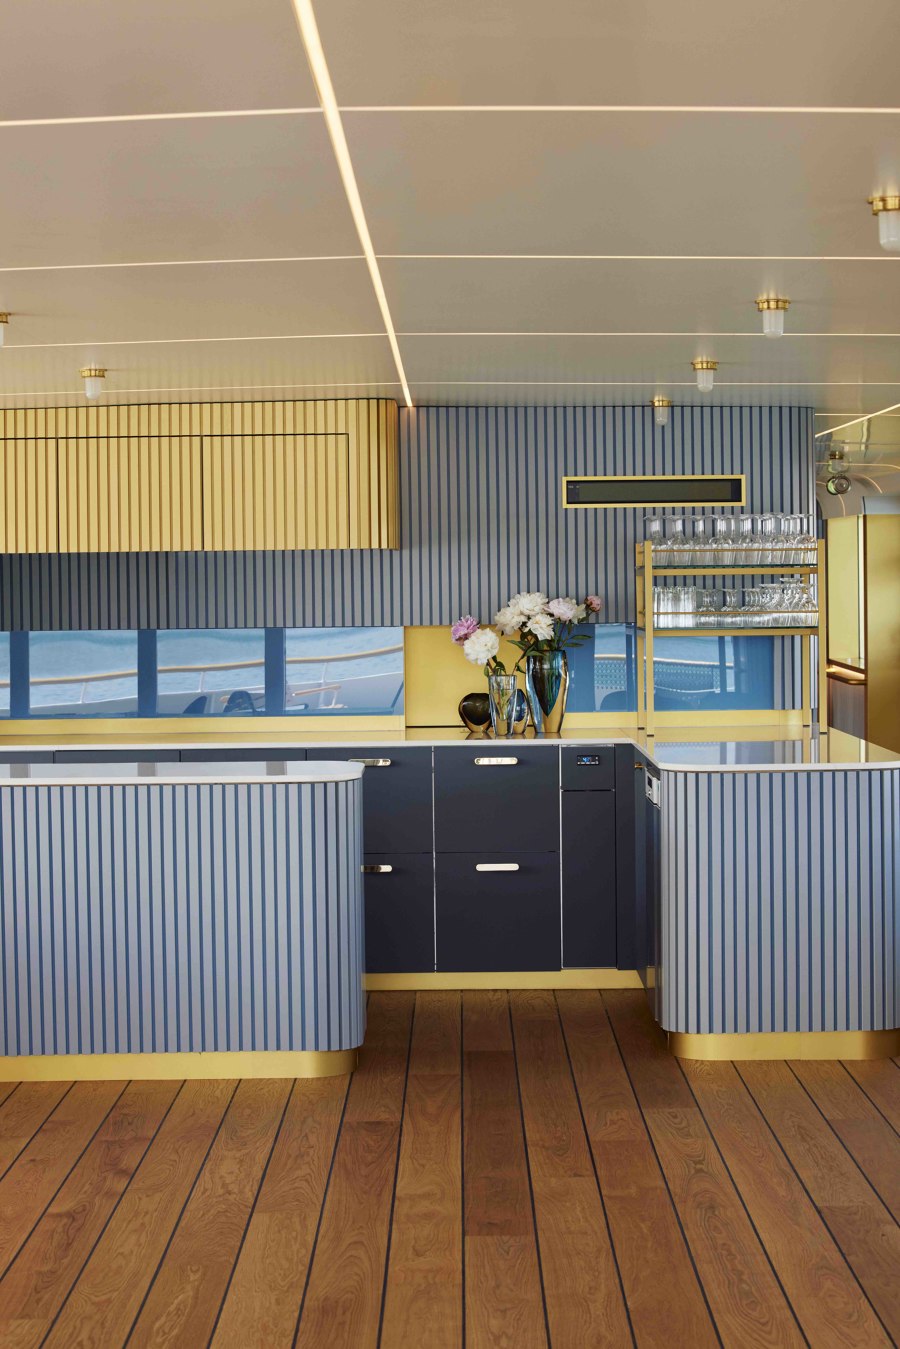 Argolite's HPL panels for more functionality and value at sea | Nouveautés